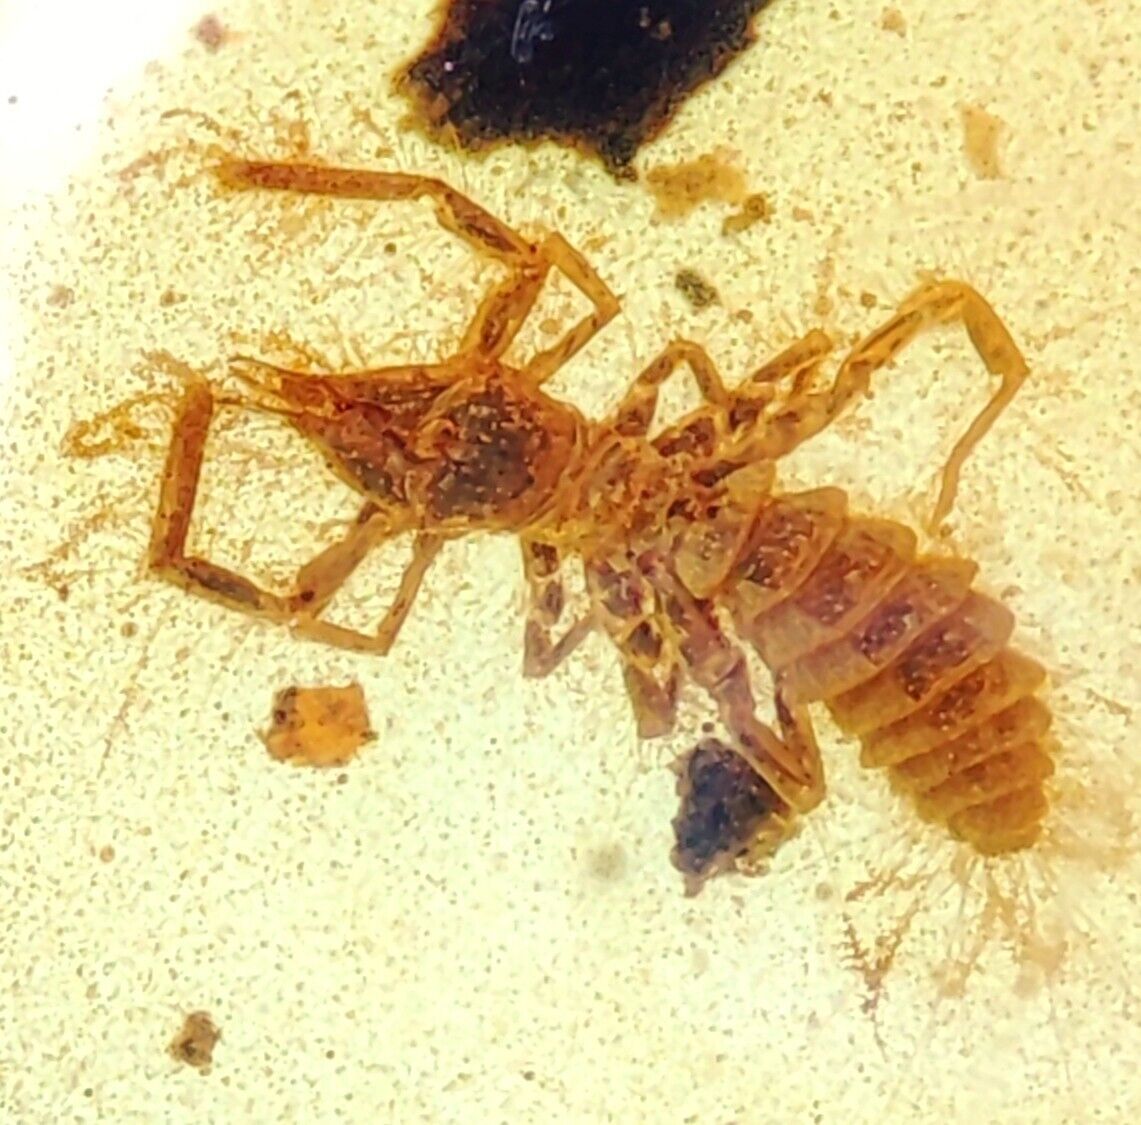 Uber rare extinct Solifugae ( sun or camel spider ) in Burmite amber fossil